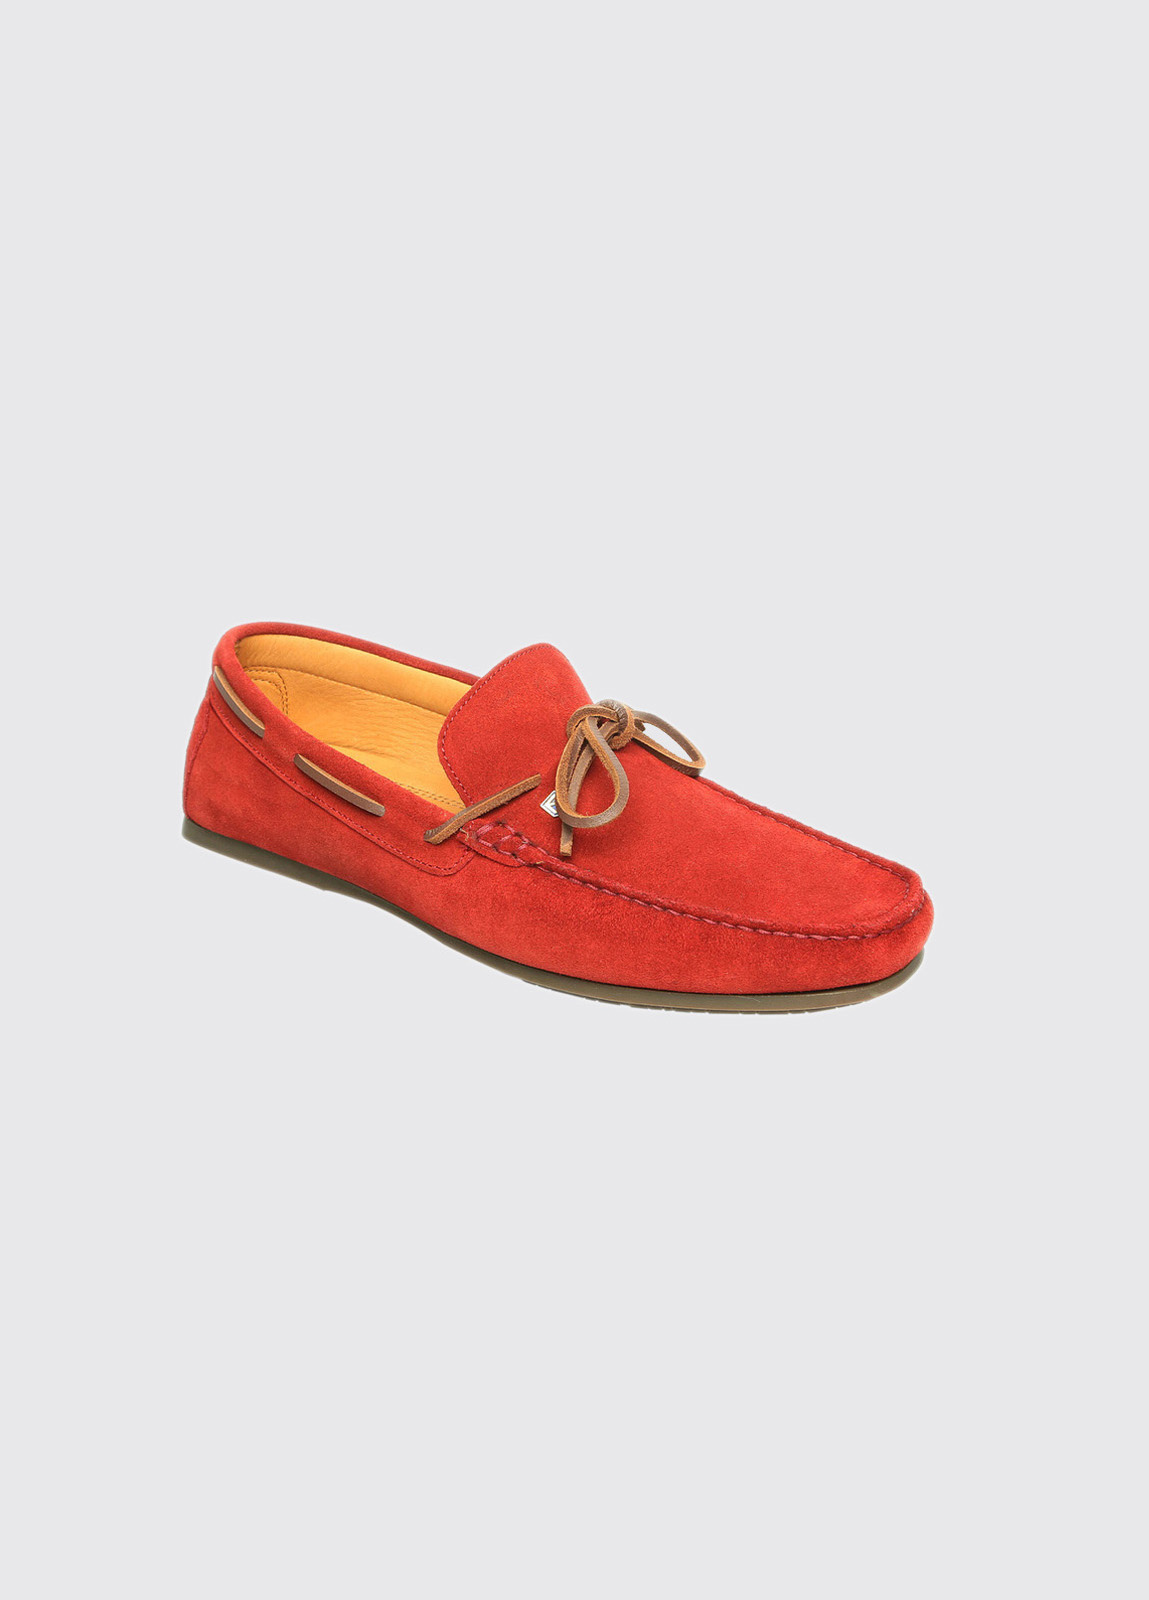 Corsica Mens Deck Shoe - Red